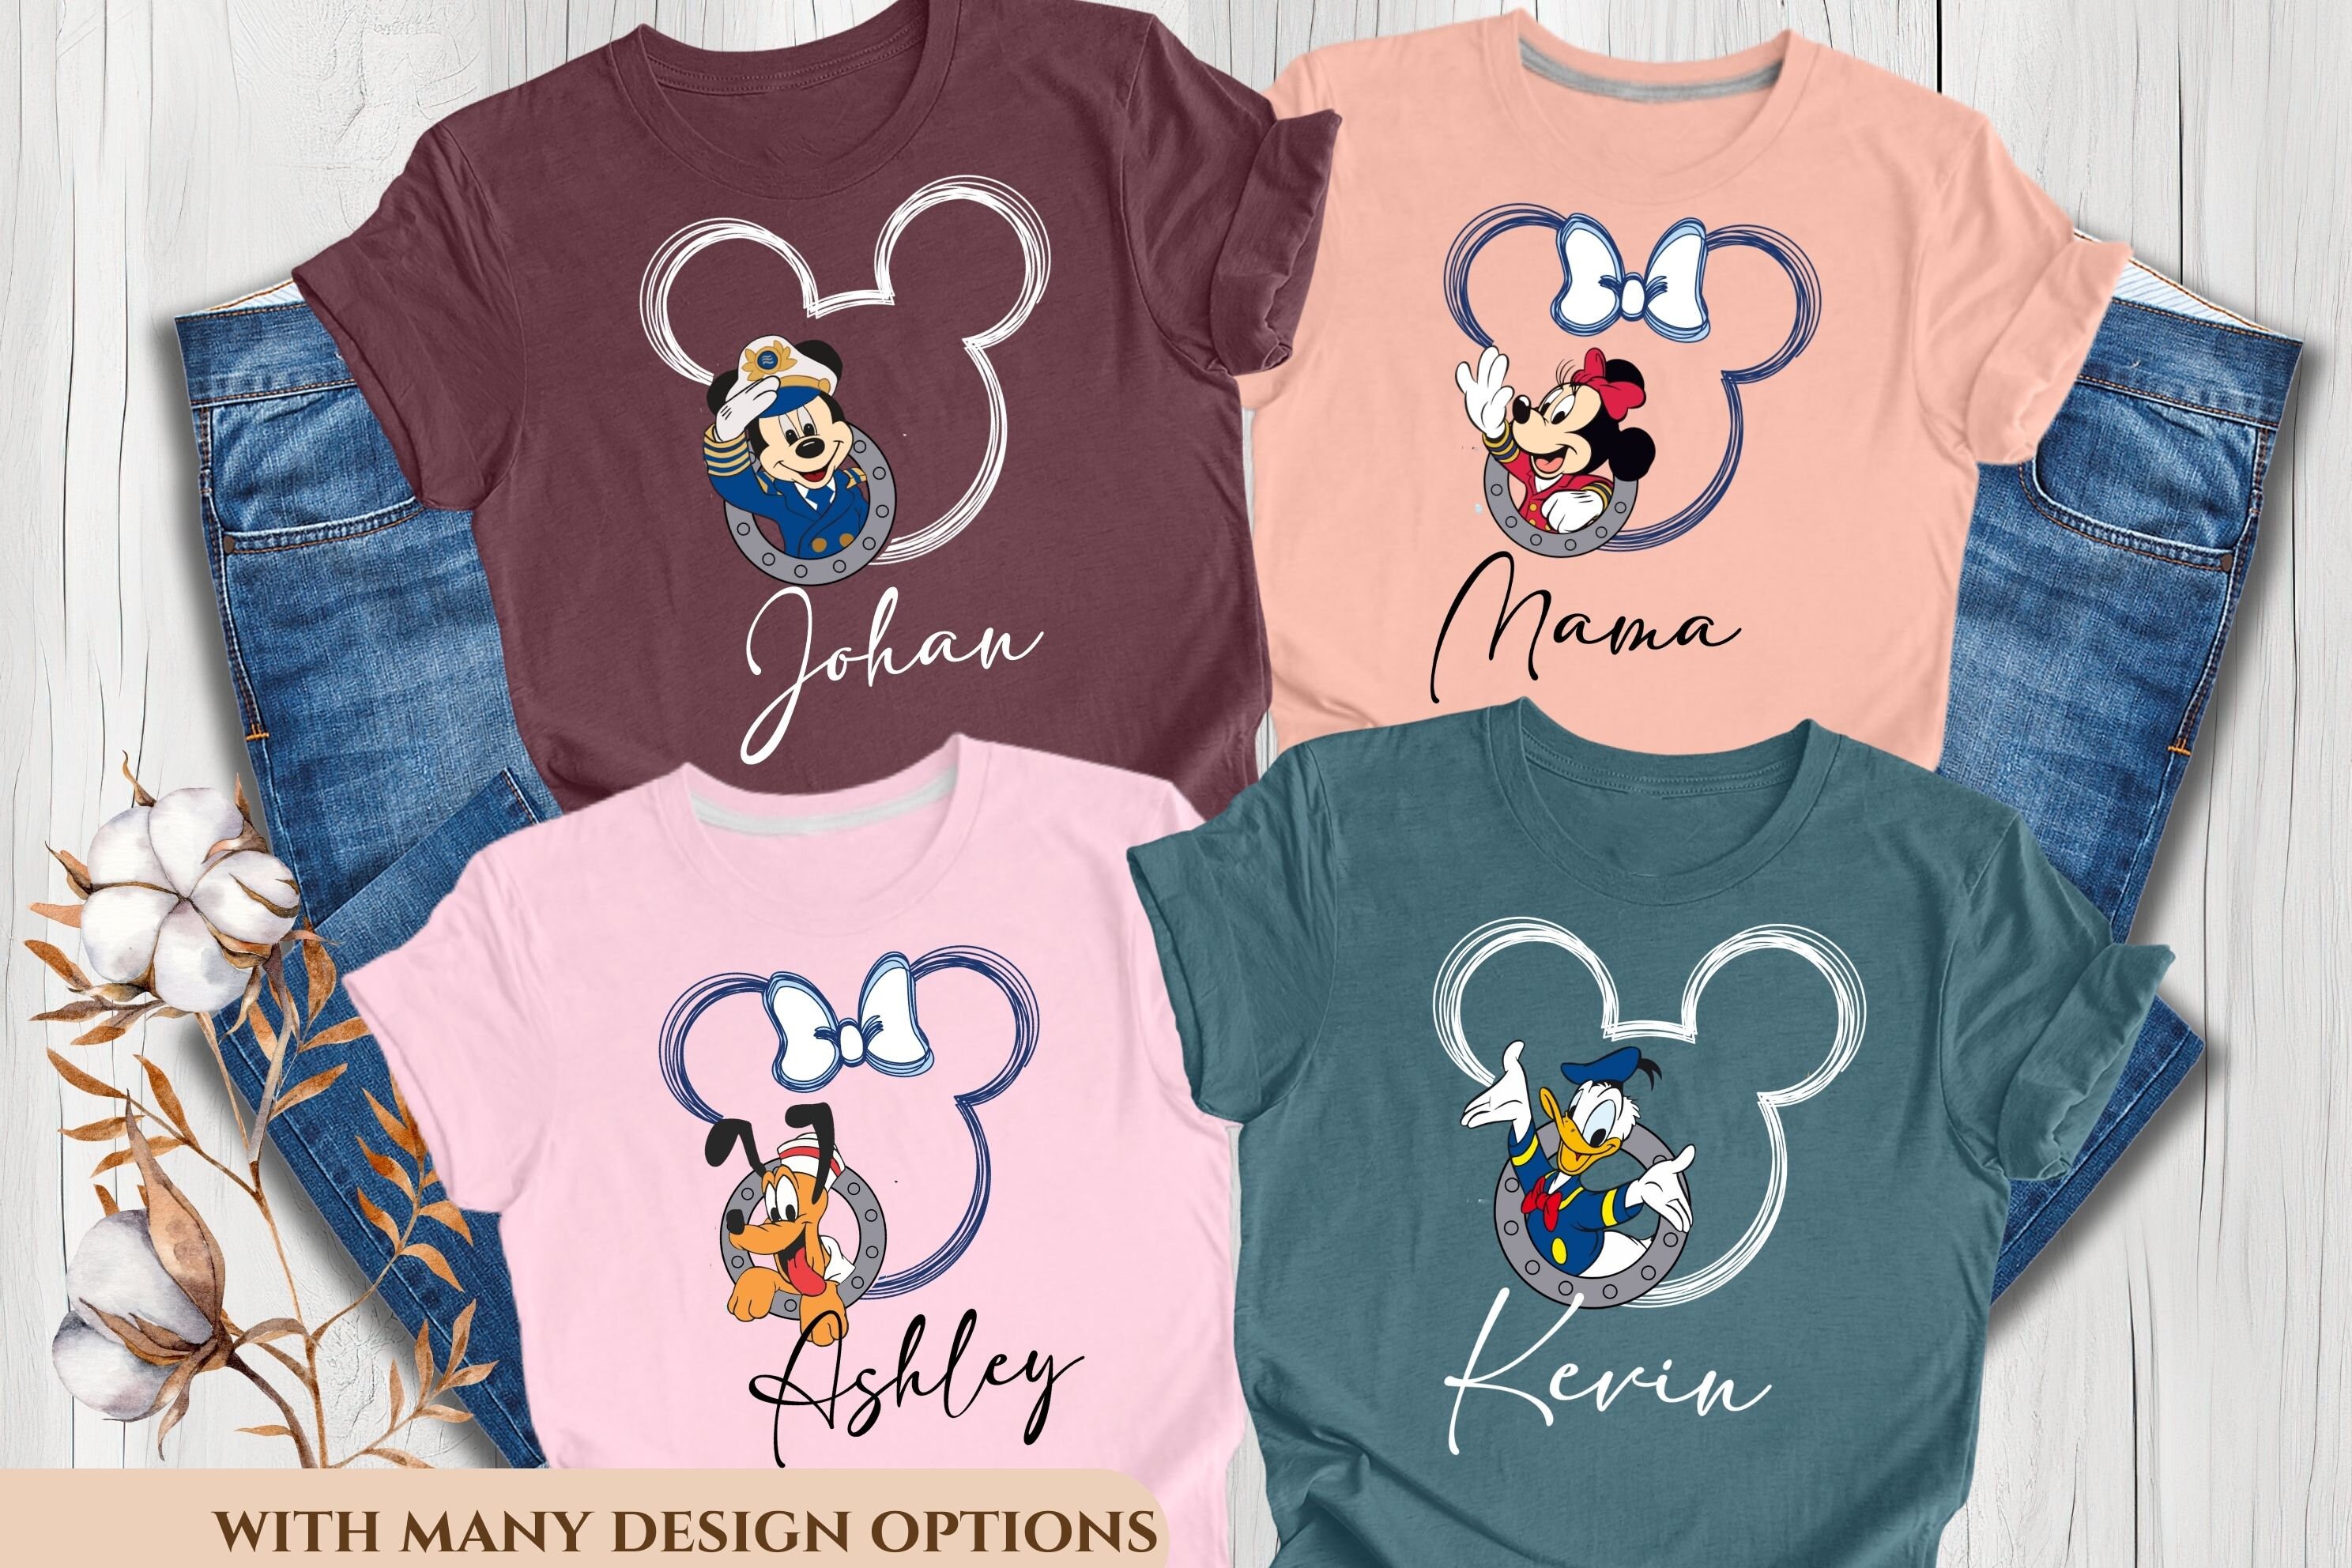 Discover Custom Disney Cruise Family Vacation 2024 Shirt, Disney Cruise Group Shirt